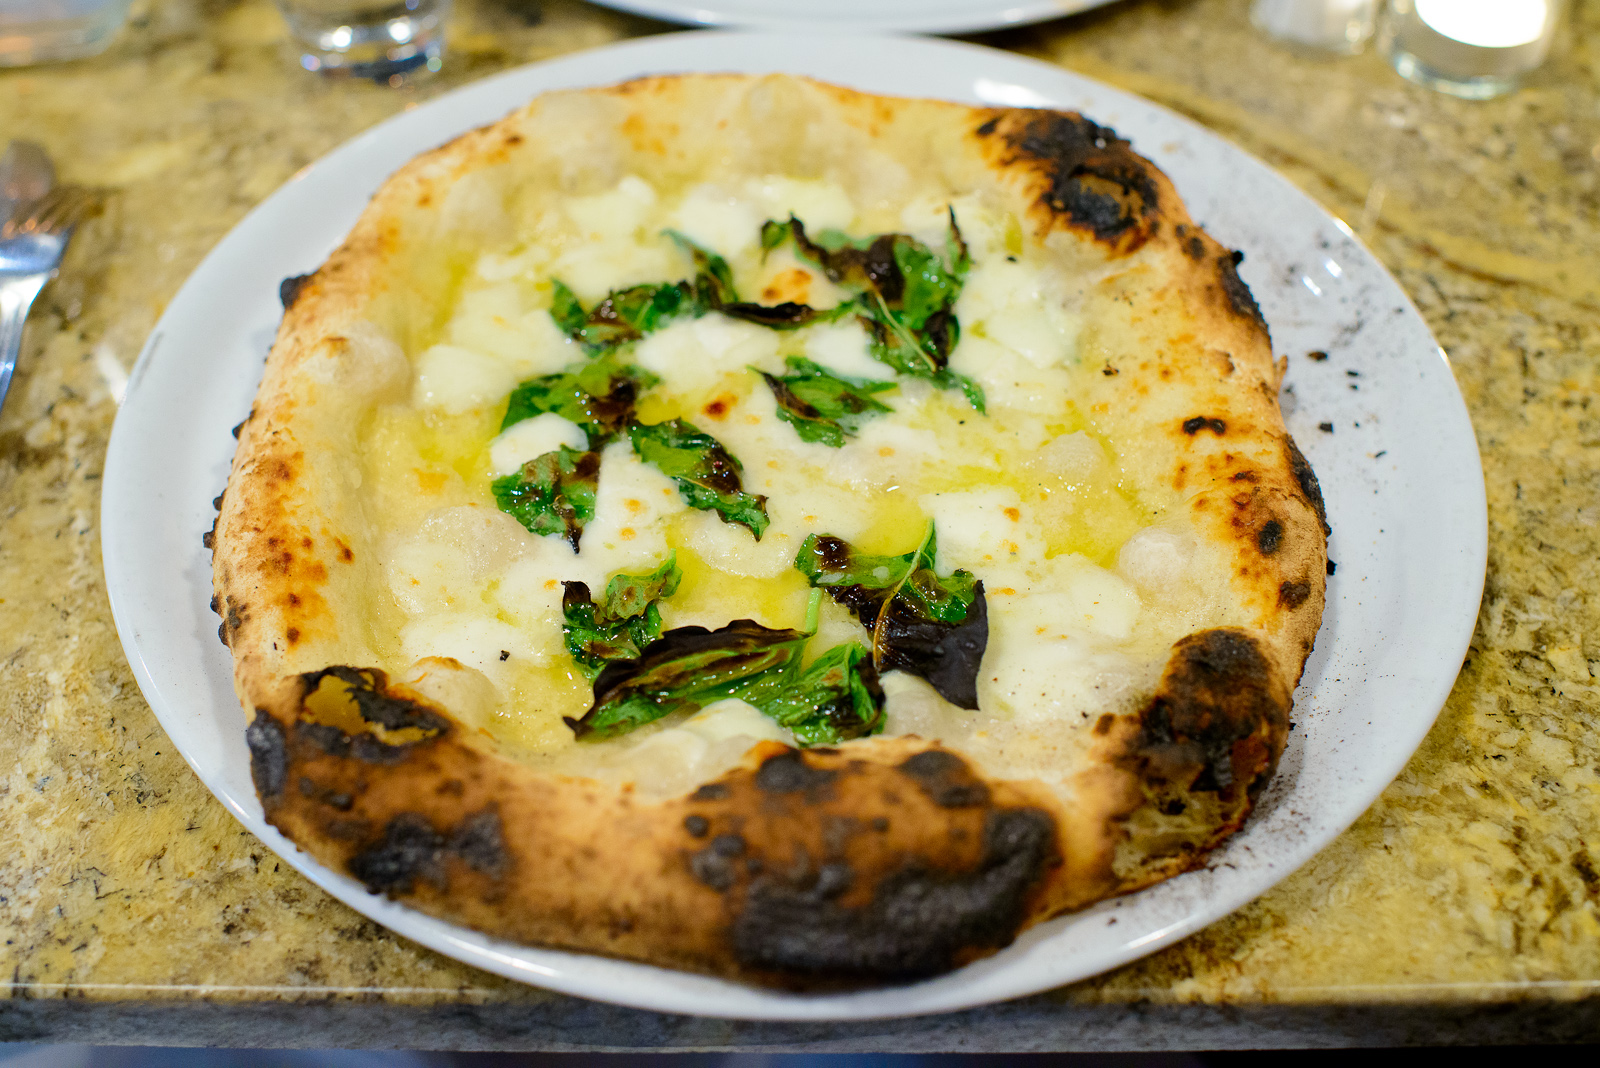 Pizza Bianca - Buffalo mozzarella, extra-virgin olive oil, fresh